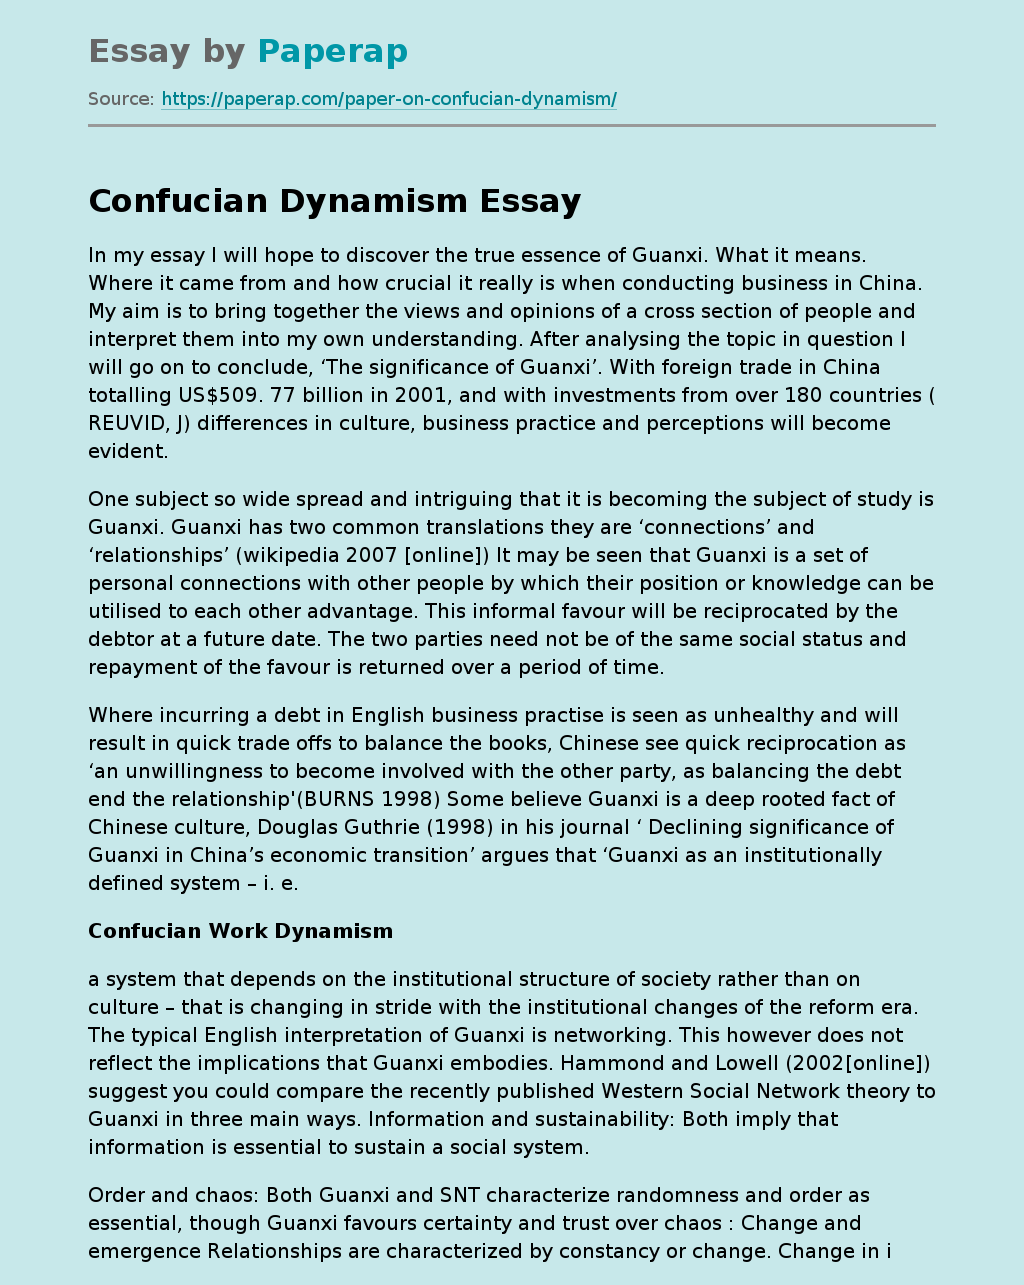 Confucian Dynamism